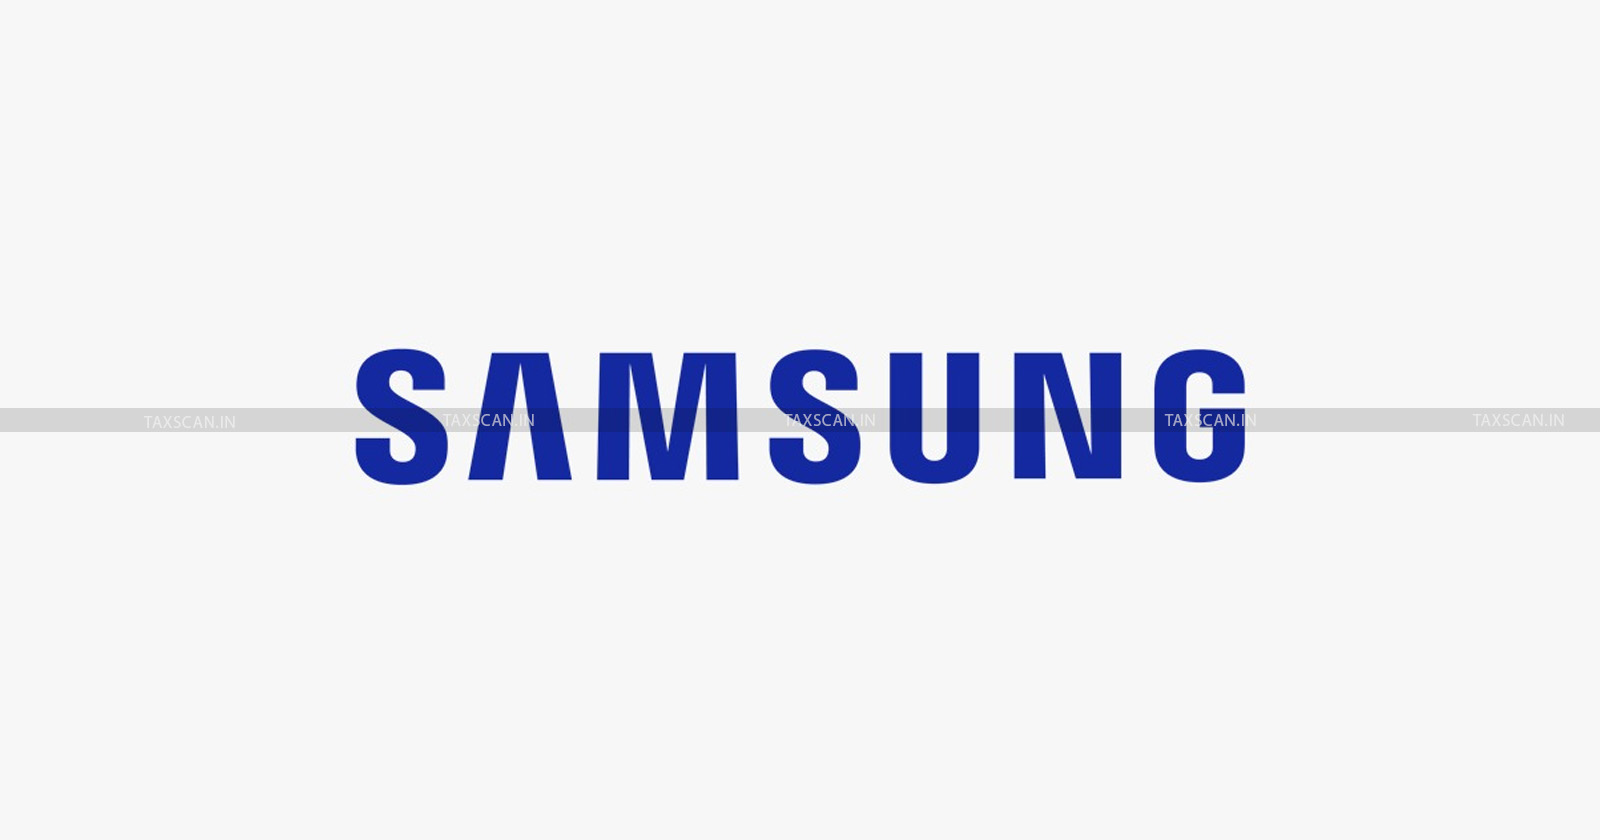 Samsung India - CESTAT - CESTAT Allahabad - Cenvat Credit refund proceedings - Cenvat Credit - taxscan